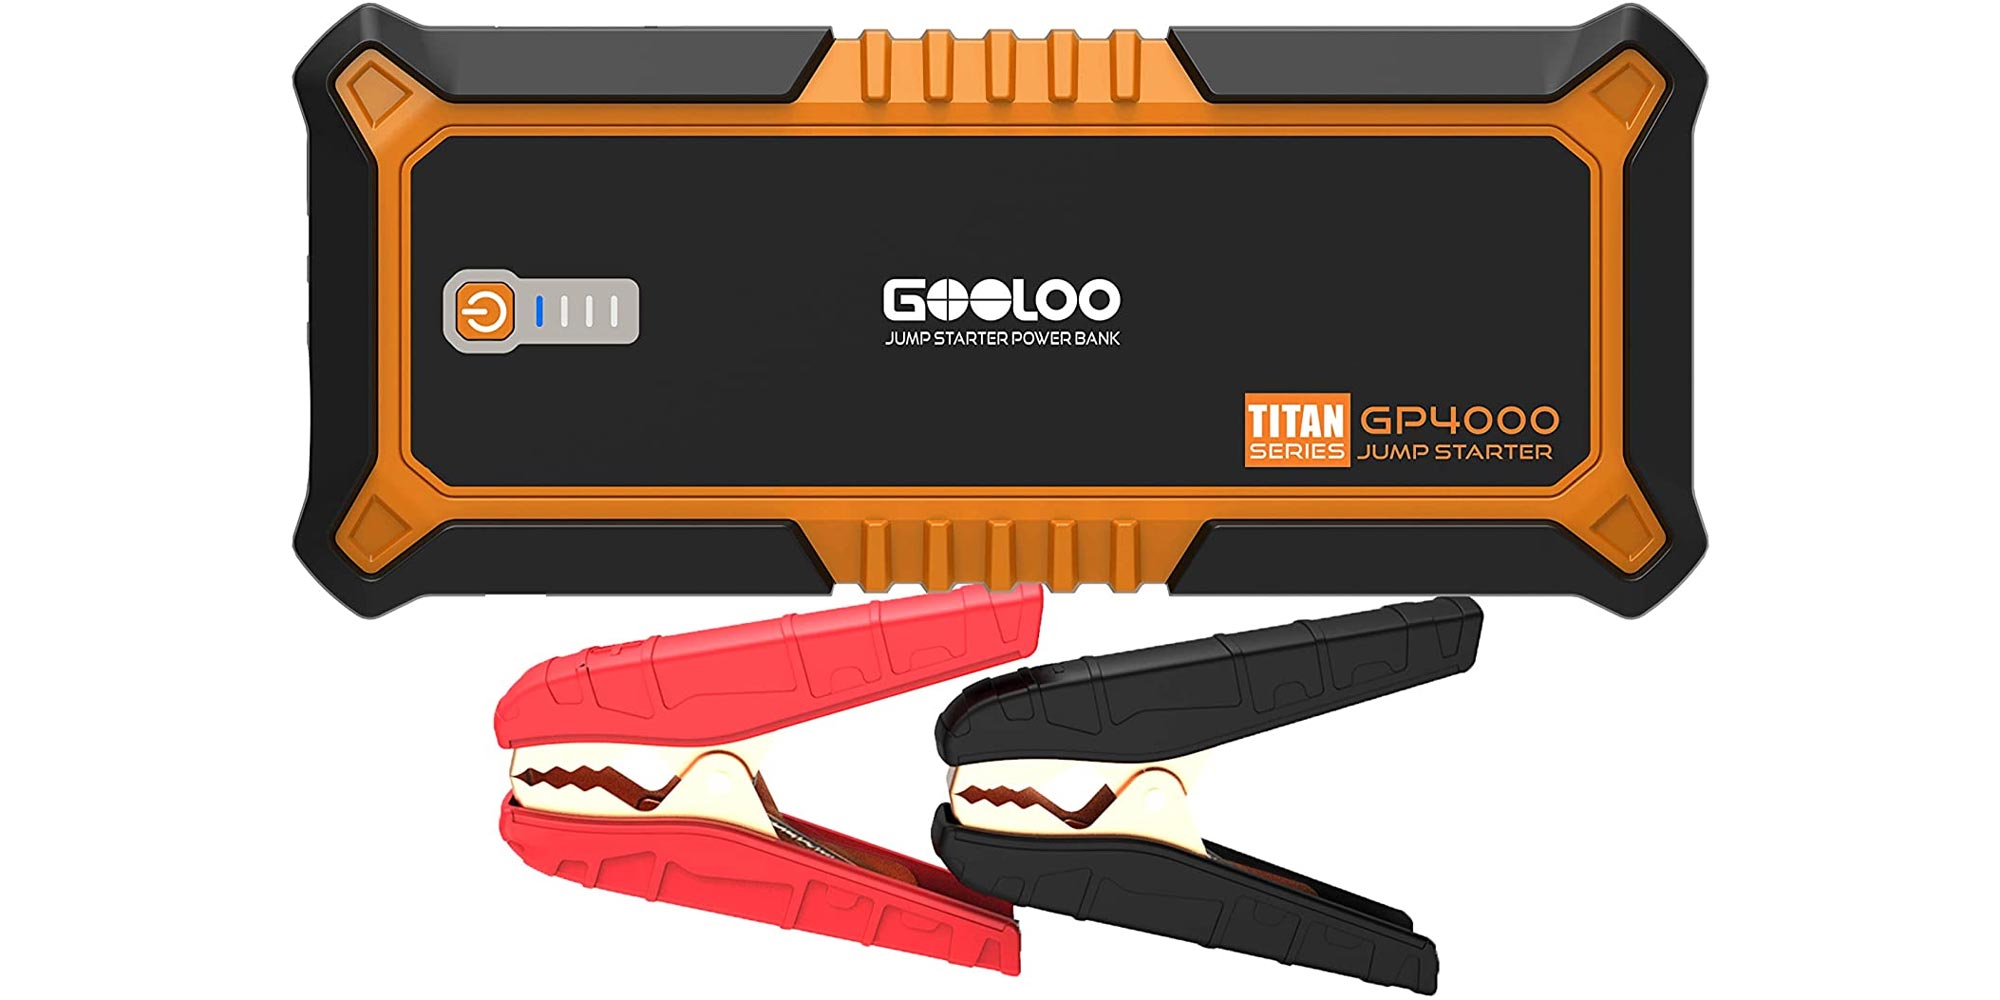 GOOLOO's massive 4000A portable jump starter also packs 15W USB-C